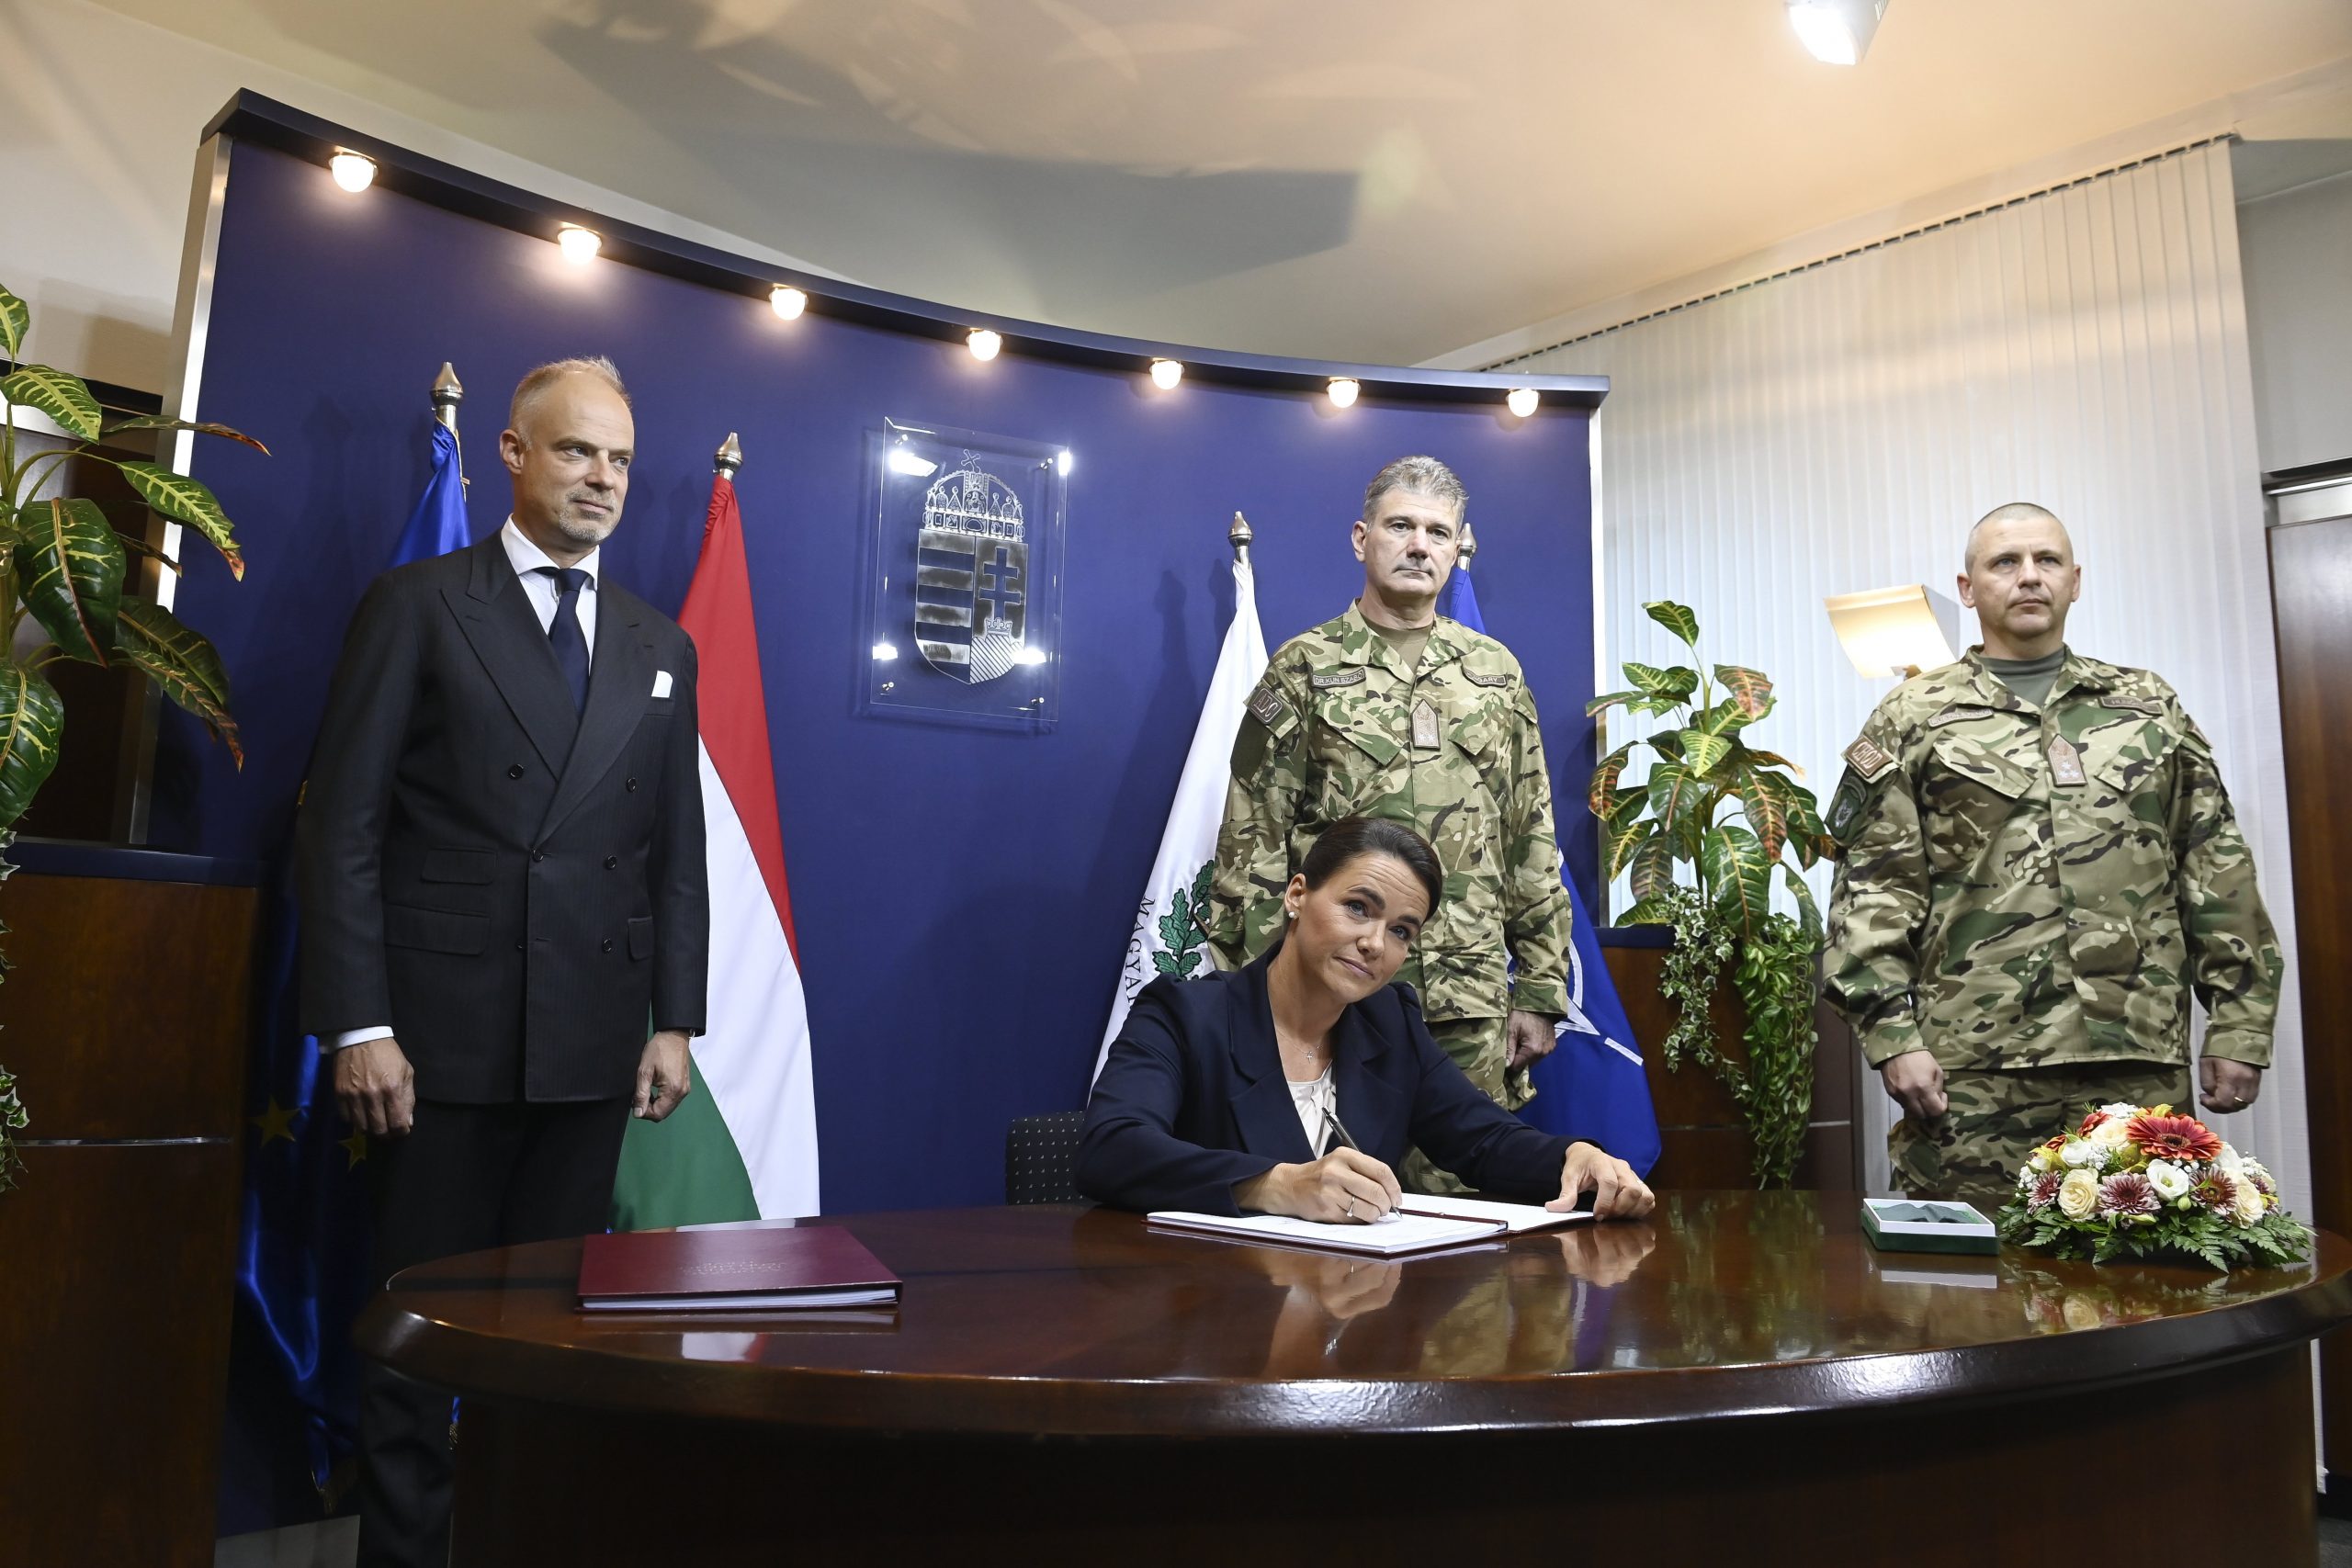 President Novák Signs Plan For Armed Defense of Hungary